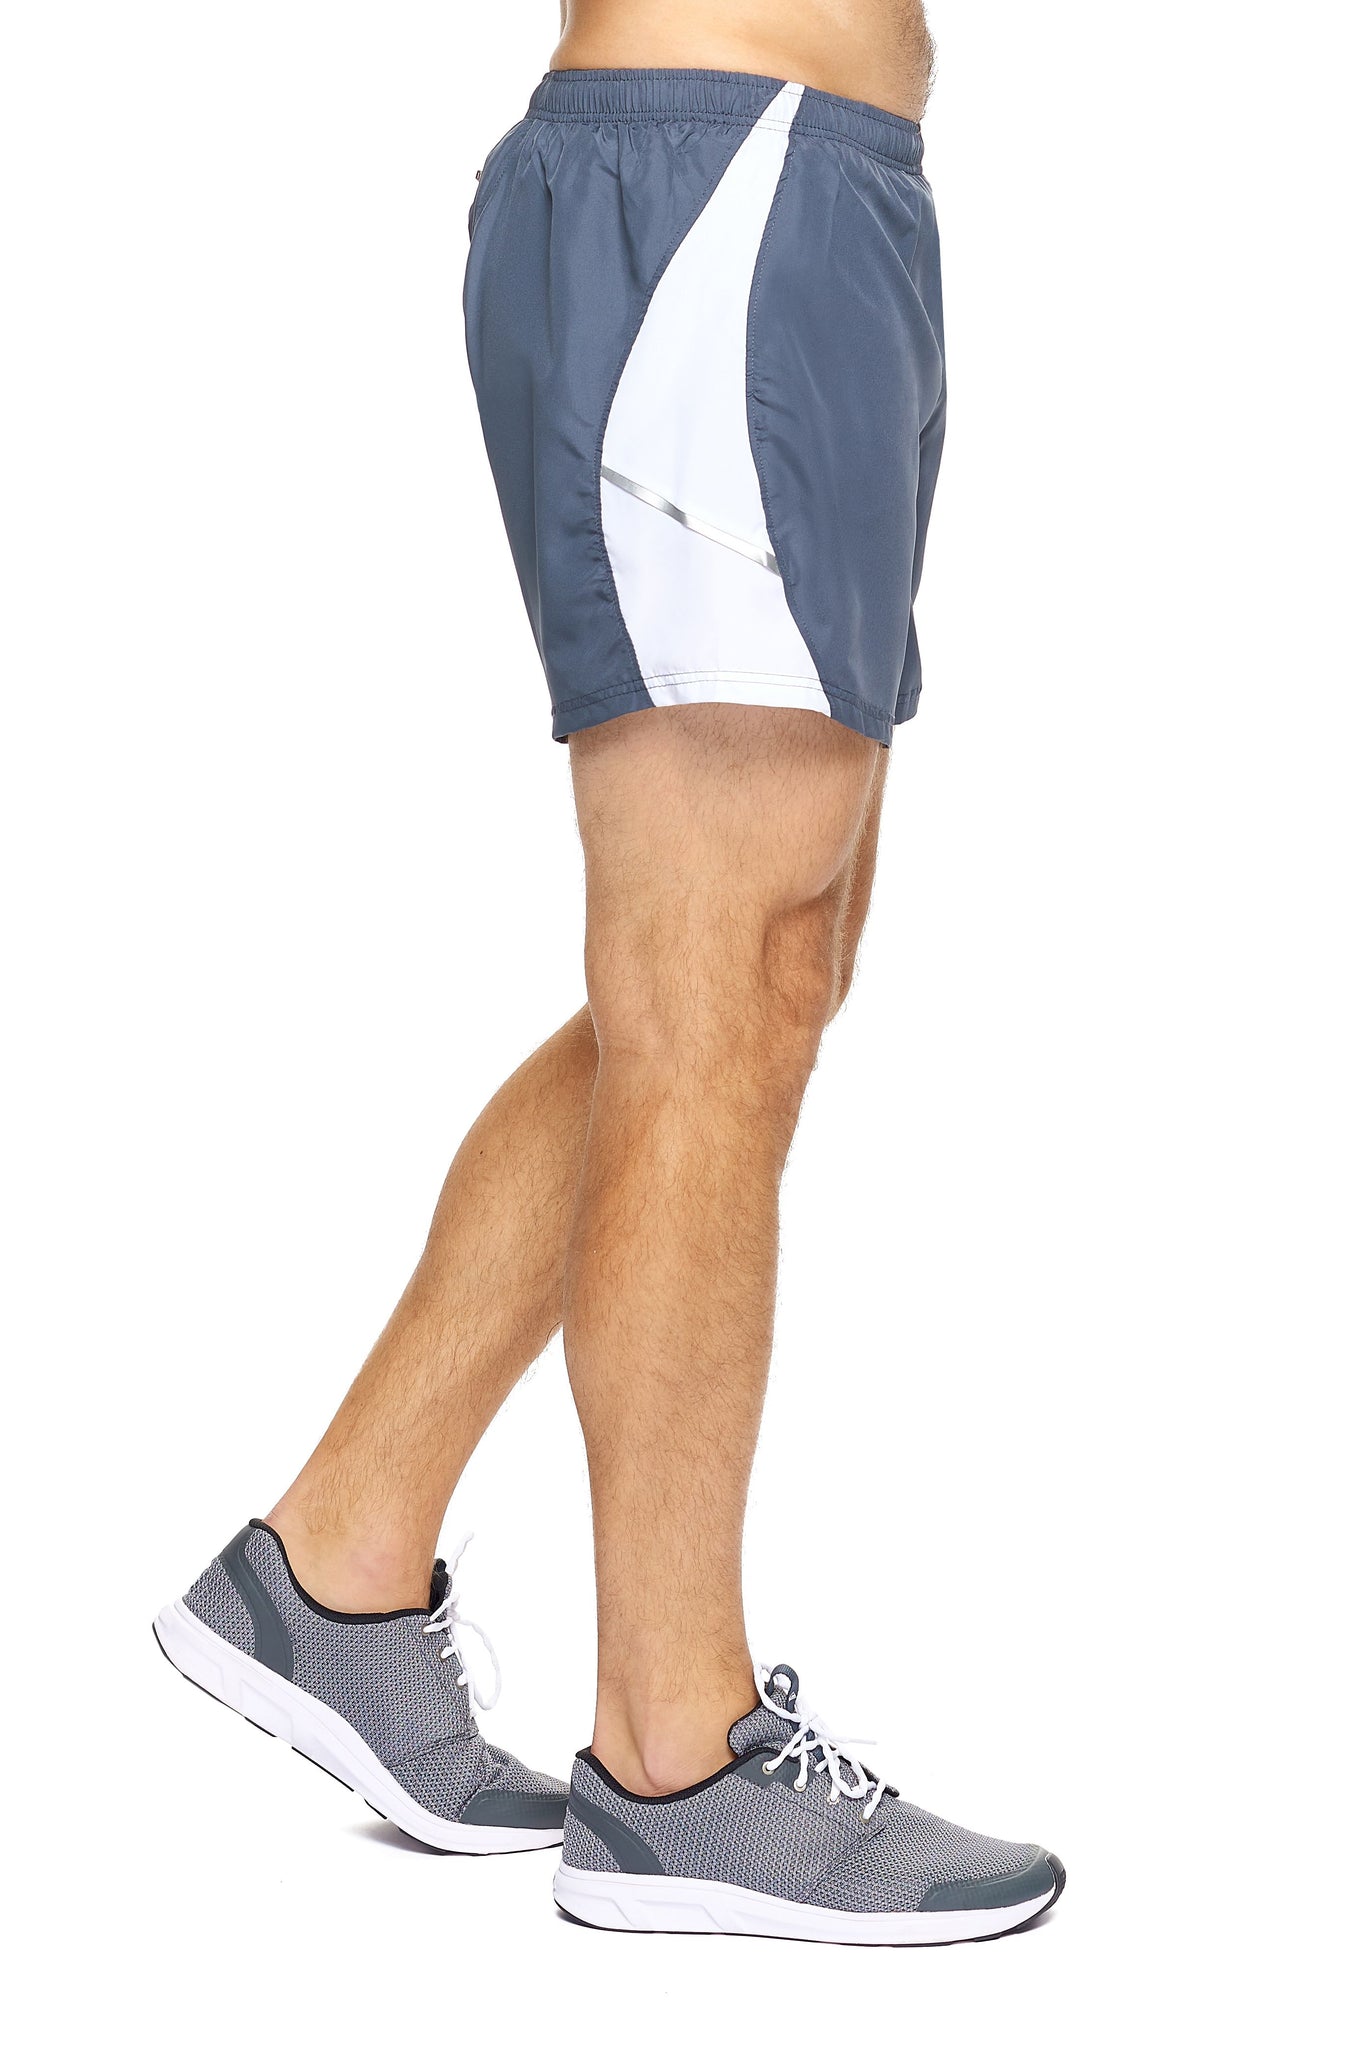 Expert Brand Wholesale Men's Sonic Shorts Running Gym in graphite white image 2#graphite-white